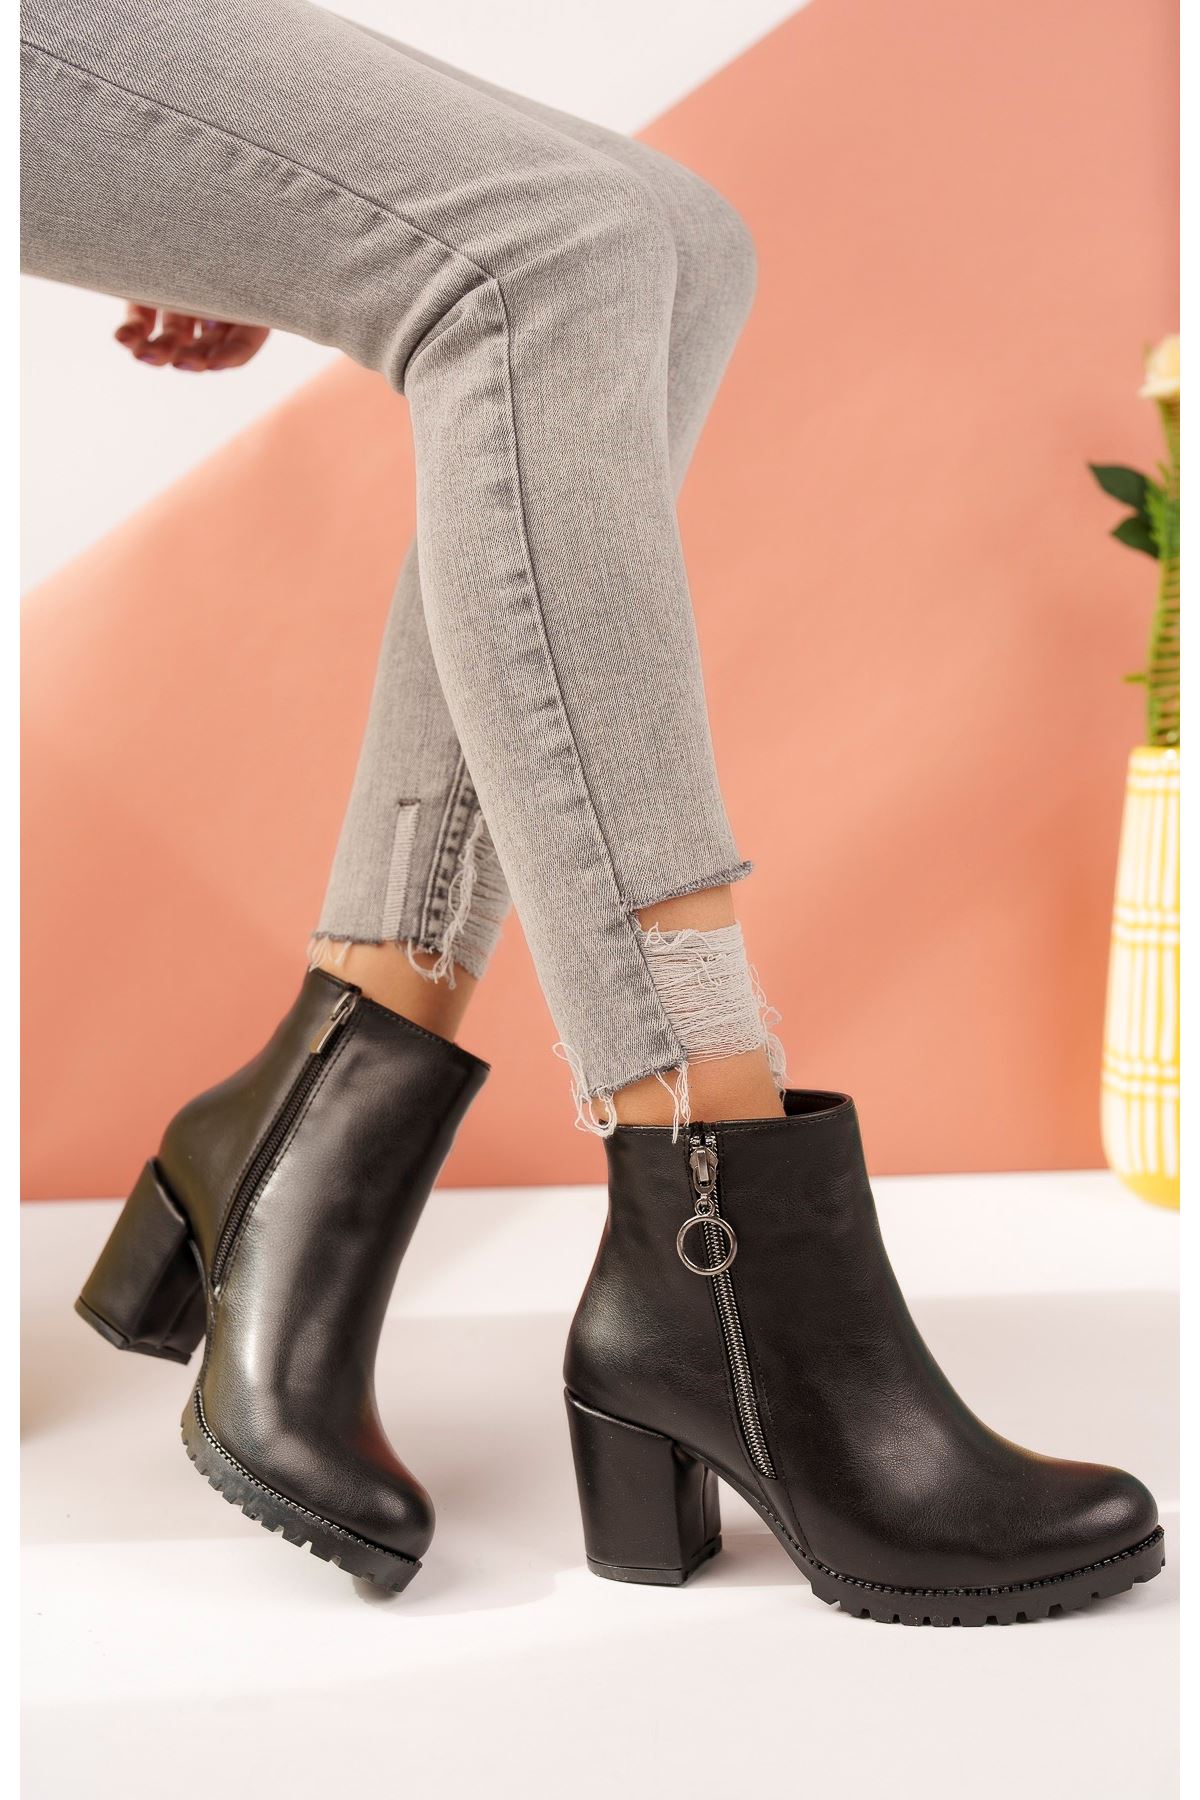 Black Skin Women's Boots with Zipper Detail